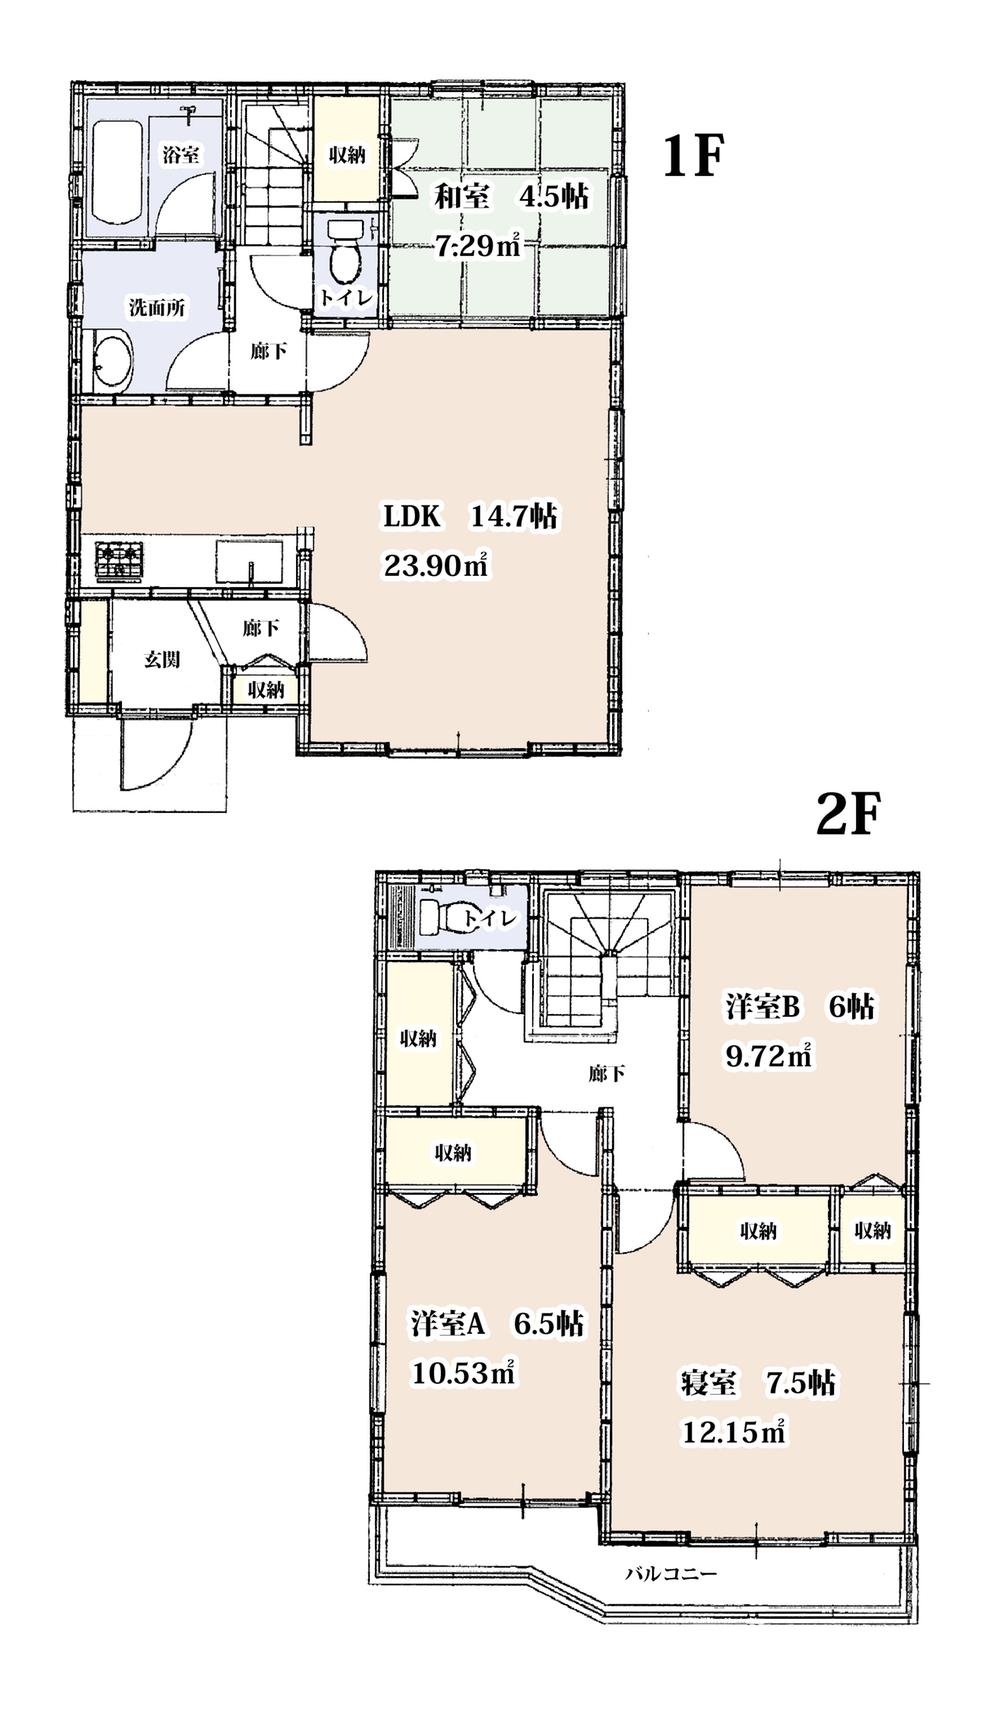 Floor plan. 27,800,000 yen, 4LDK, Land area 100 sq m , Building area 93.15 sq m